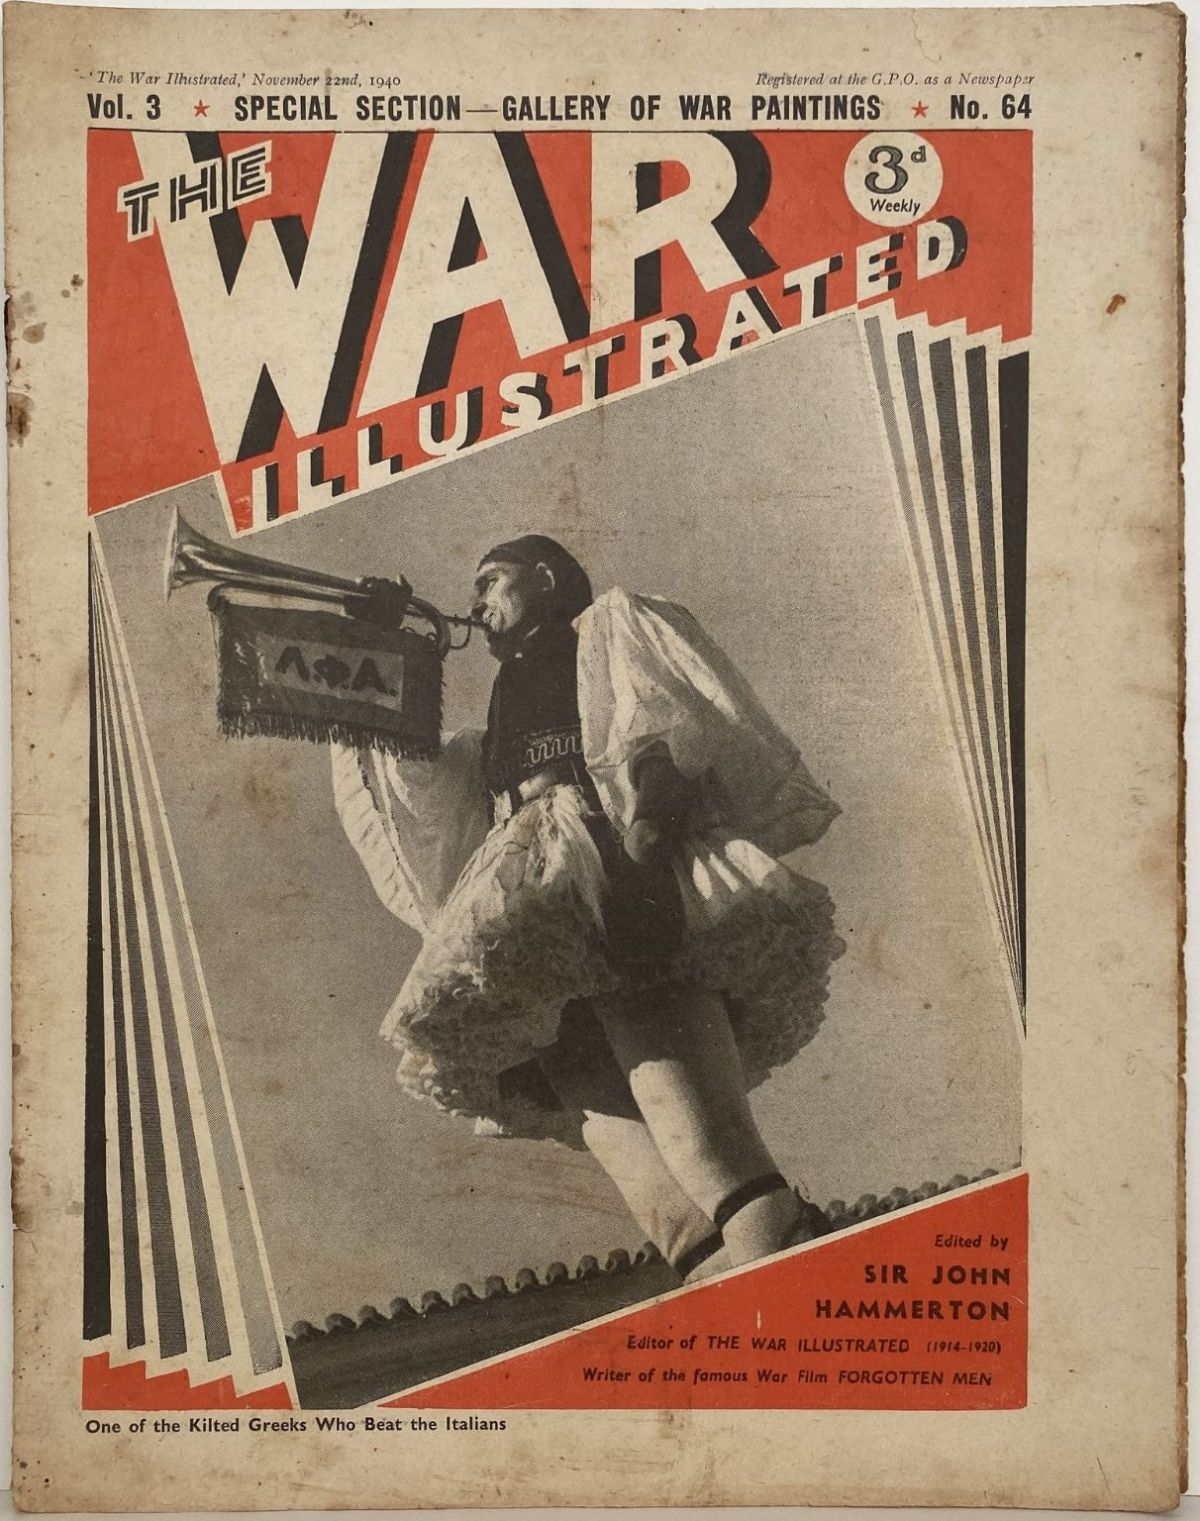 THE WAR ILLUSTRATED - Vol 3, No 64, 22nd Nov 1940